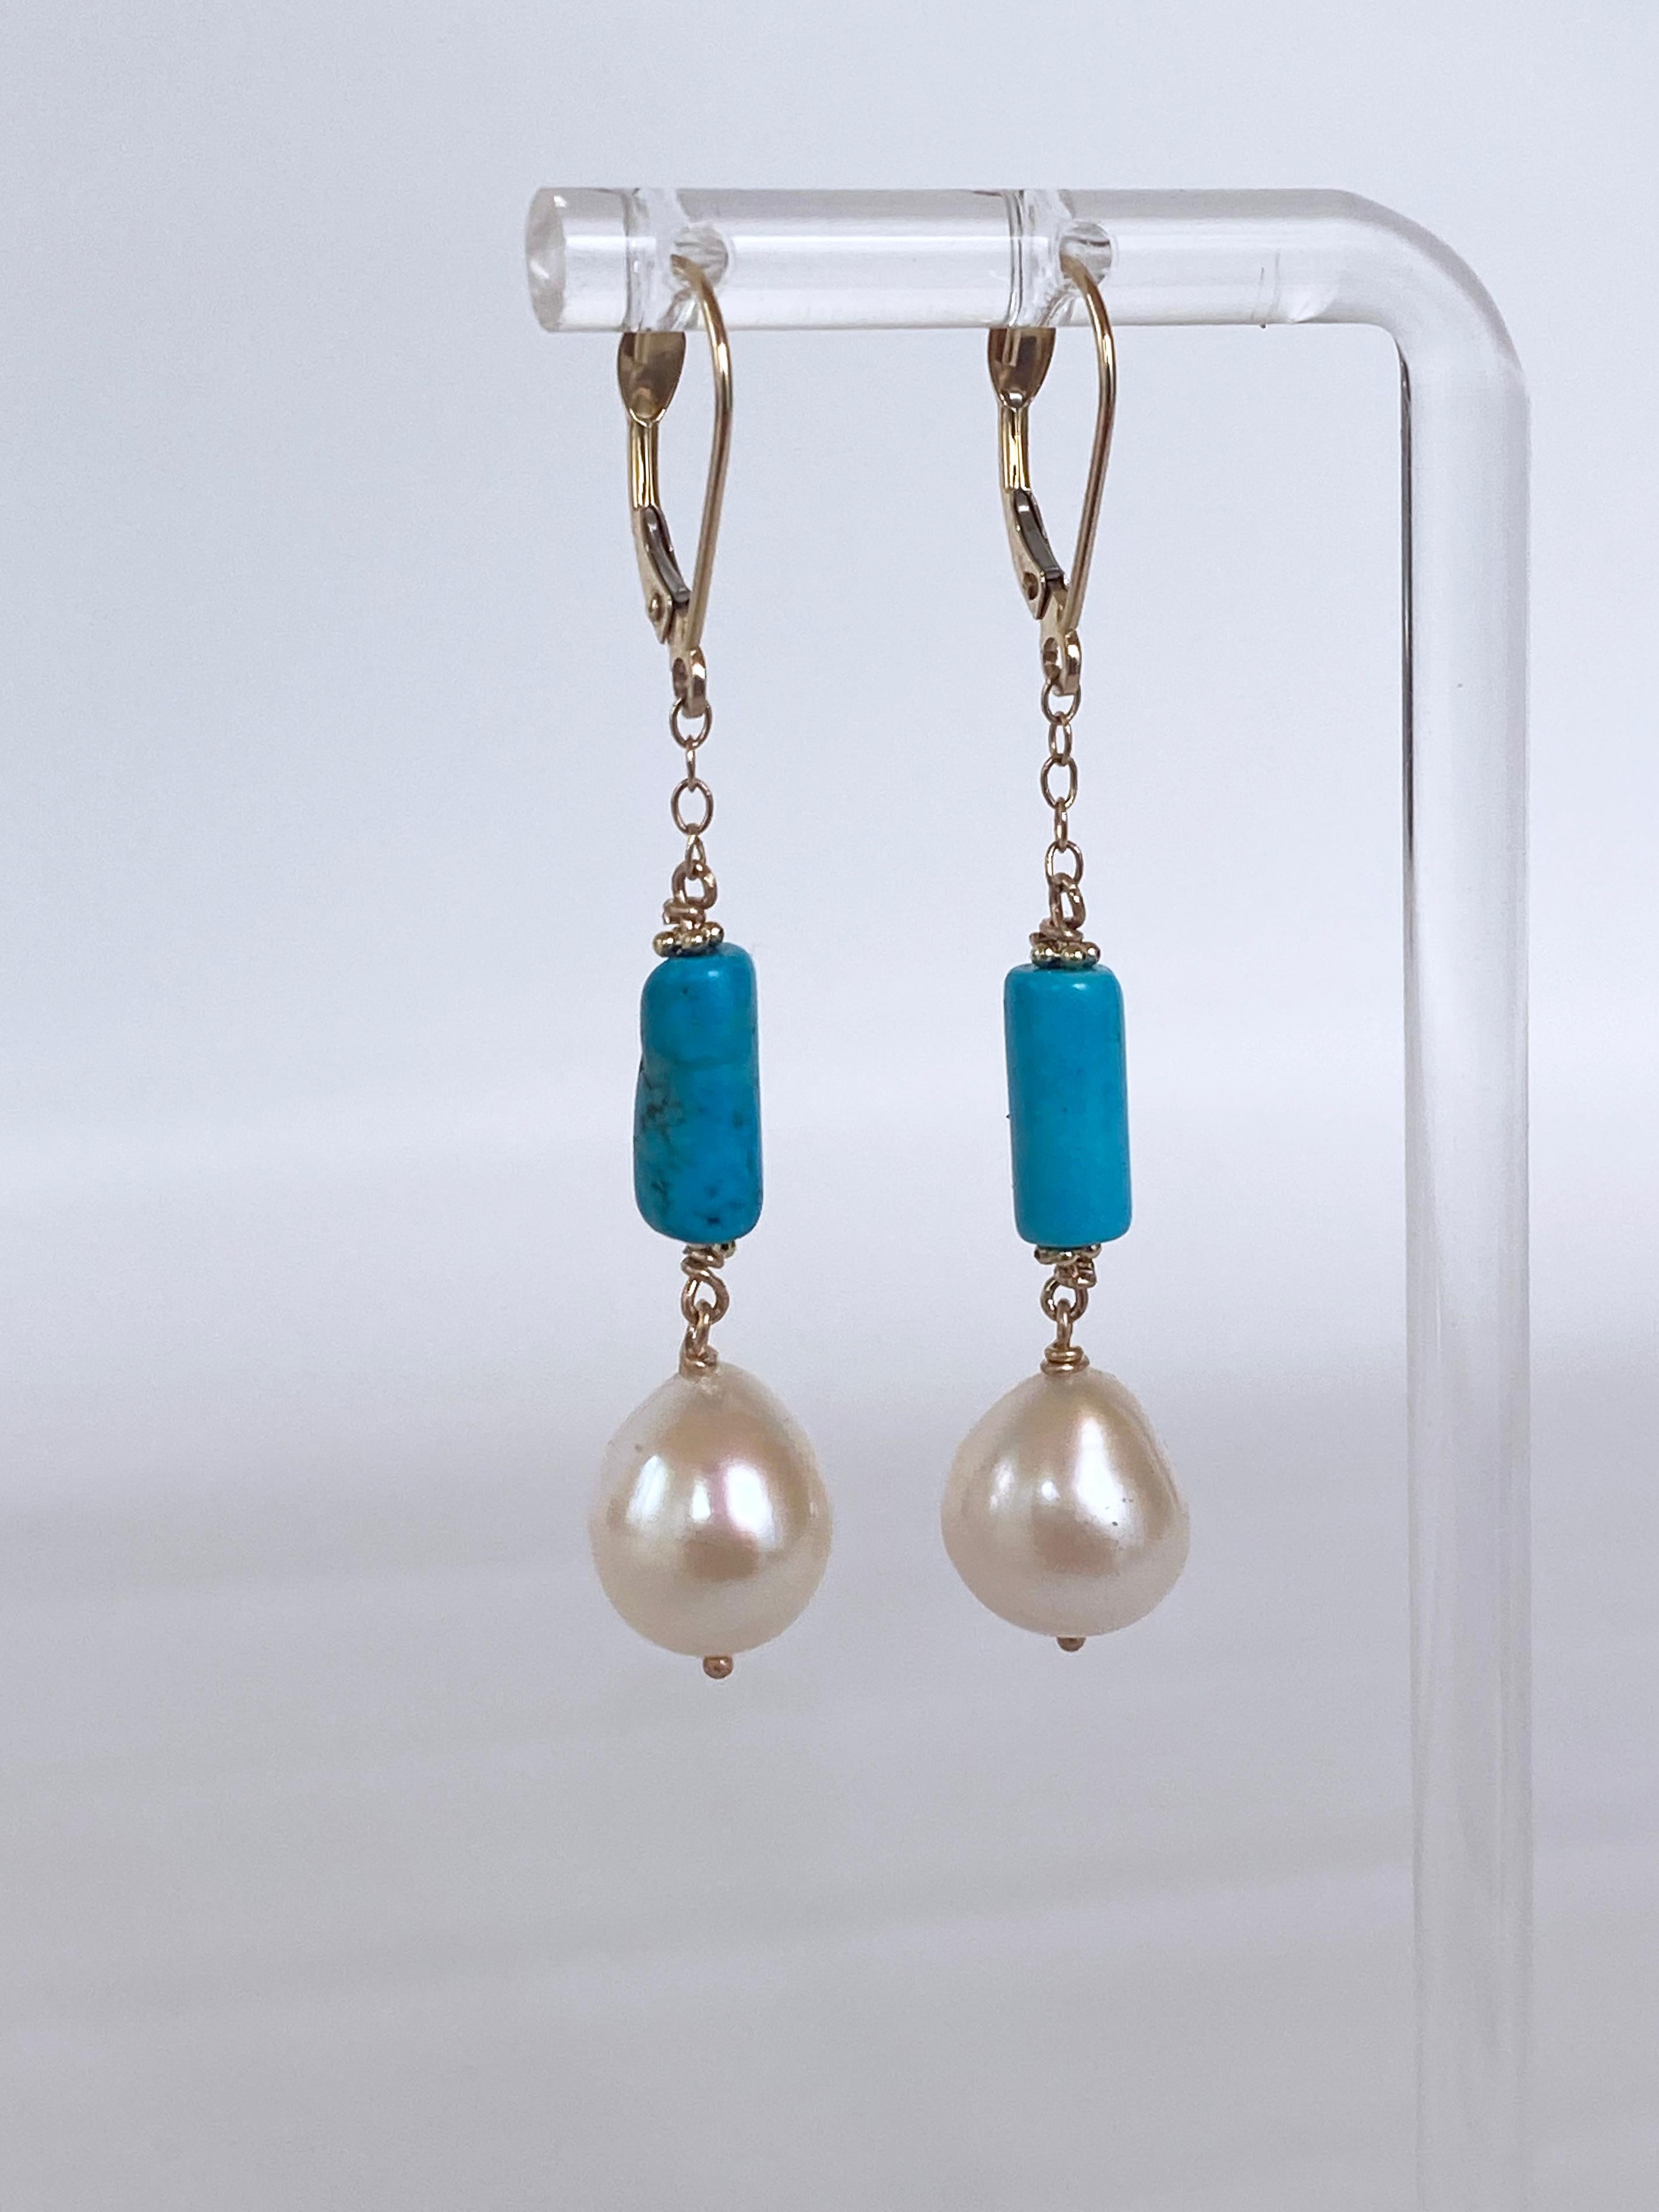 Artisan Marina J. 14k, Turquoise & Baroque Pearl Lever Back Earrings For Sale